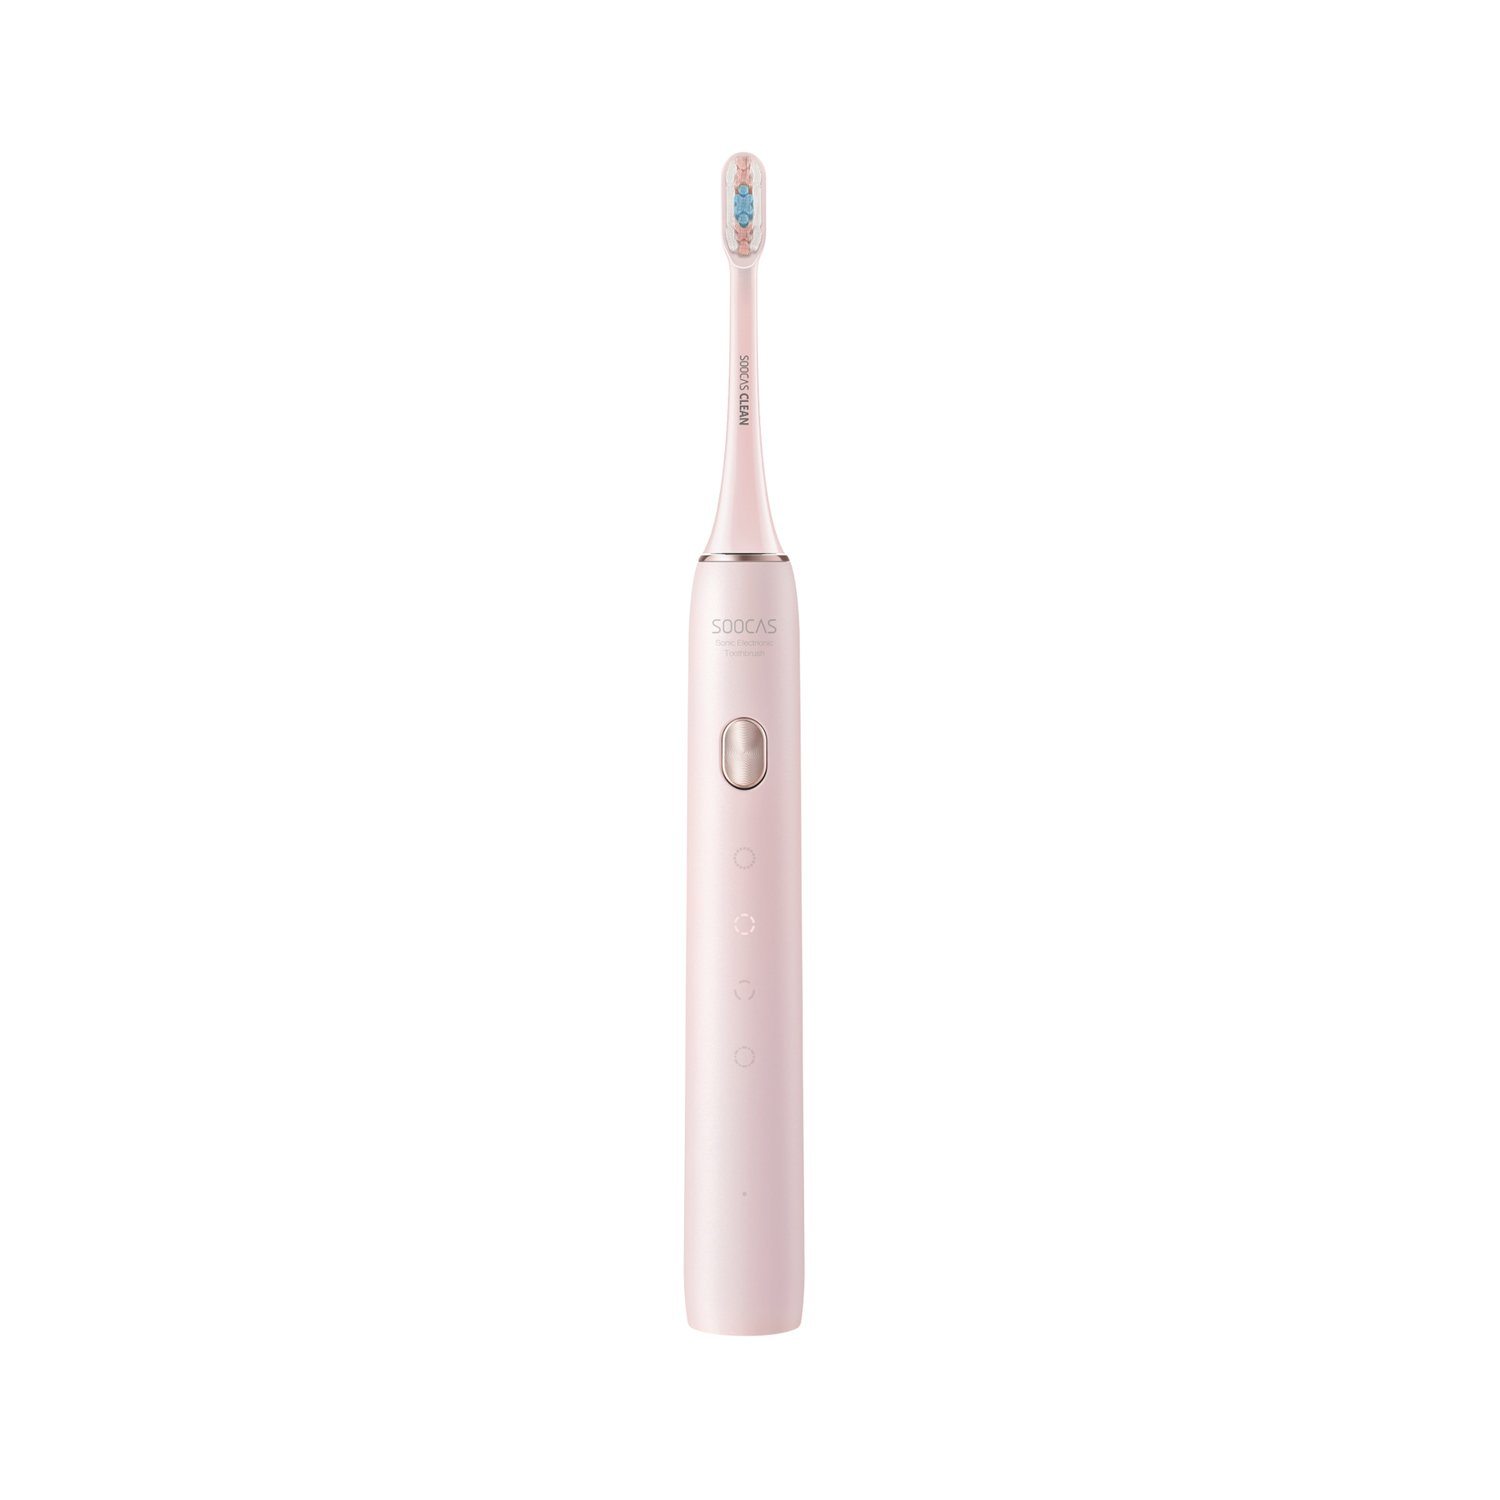 Soocas X3U Electric Toothbrush Sonic Tooth Brush, Pink Default Soocas 